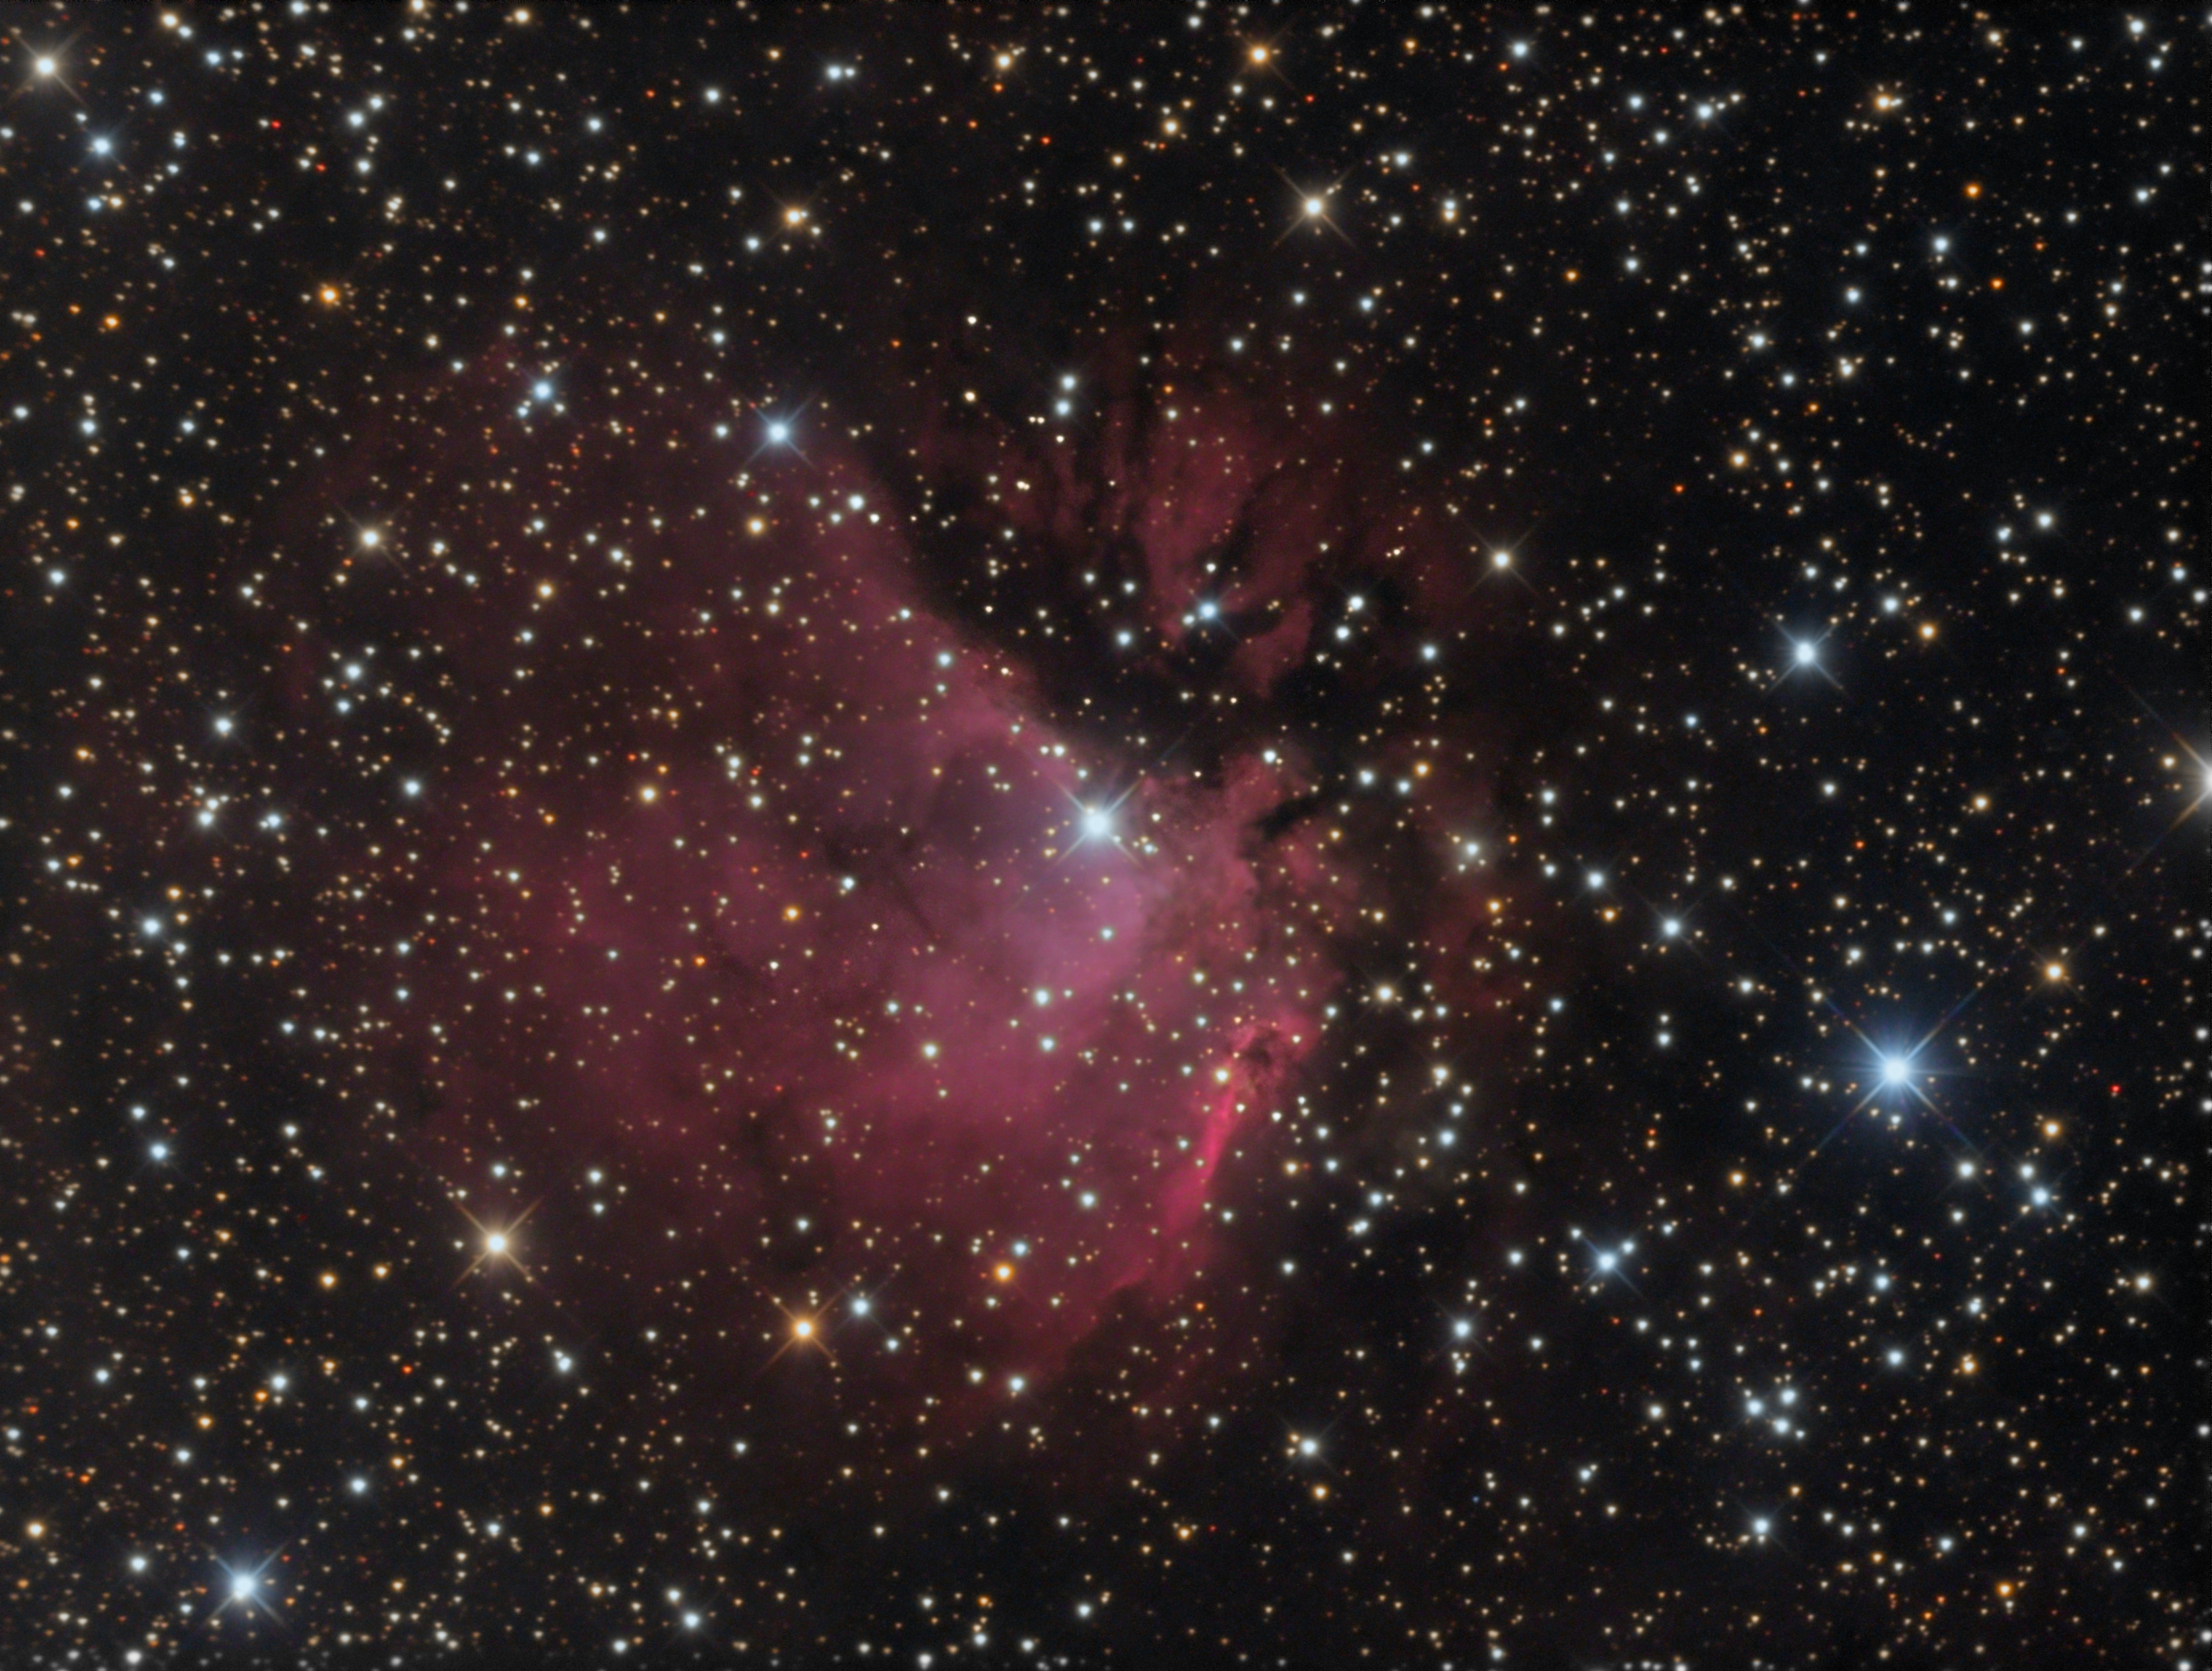 Nebula sh2-313. Nebula sh2-183. Nebula Bird's Nest sh2-223. Star interactive